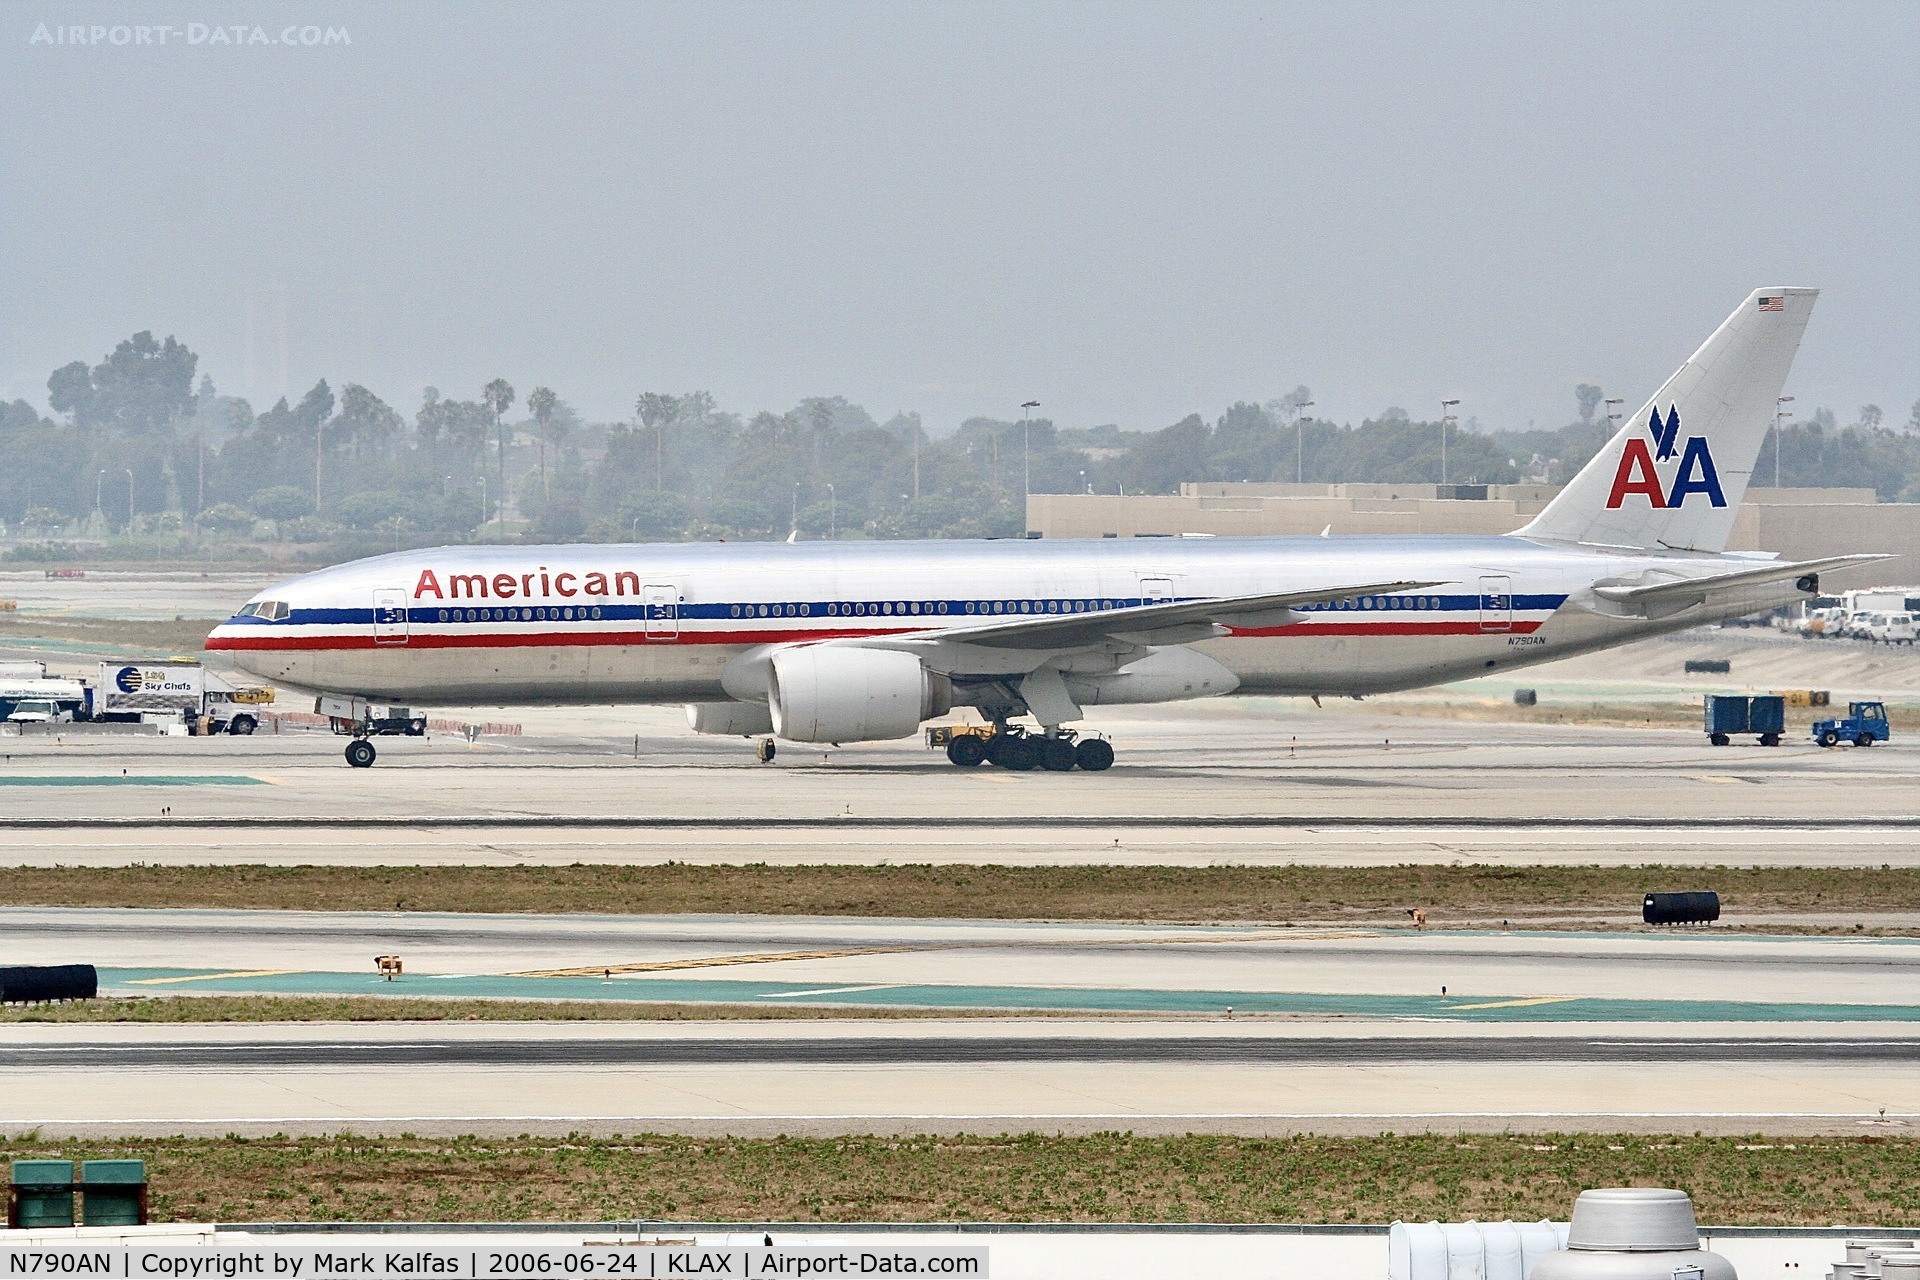 N790AN, 2000 Boeing 777-223 C/N 30251, American Boeing 777-223,N790AN, at LAX